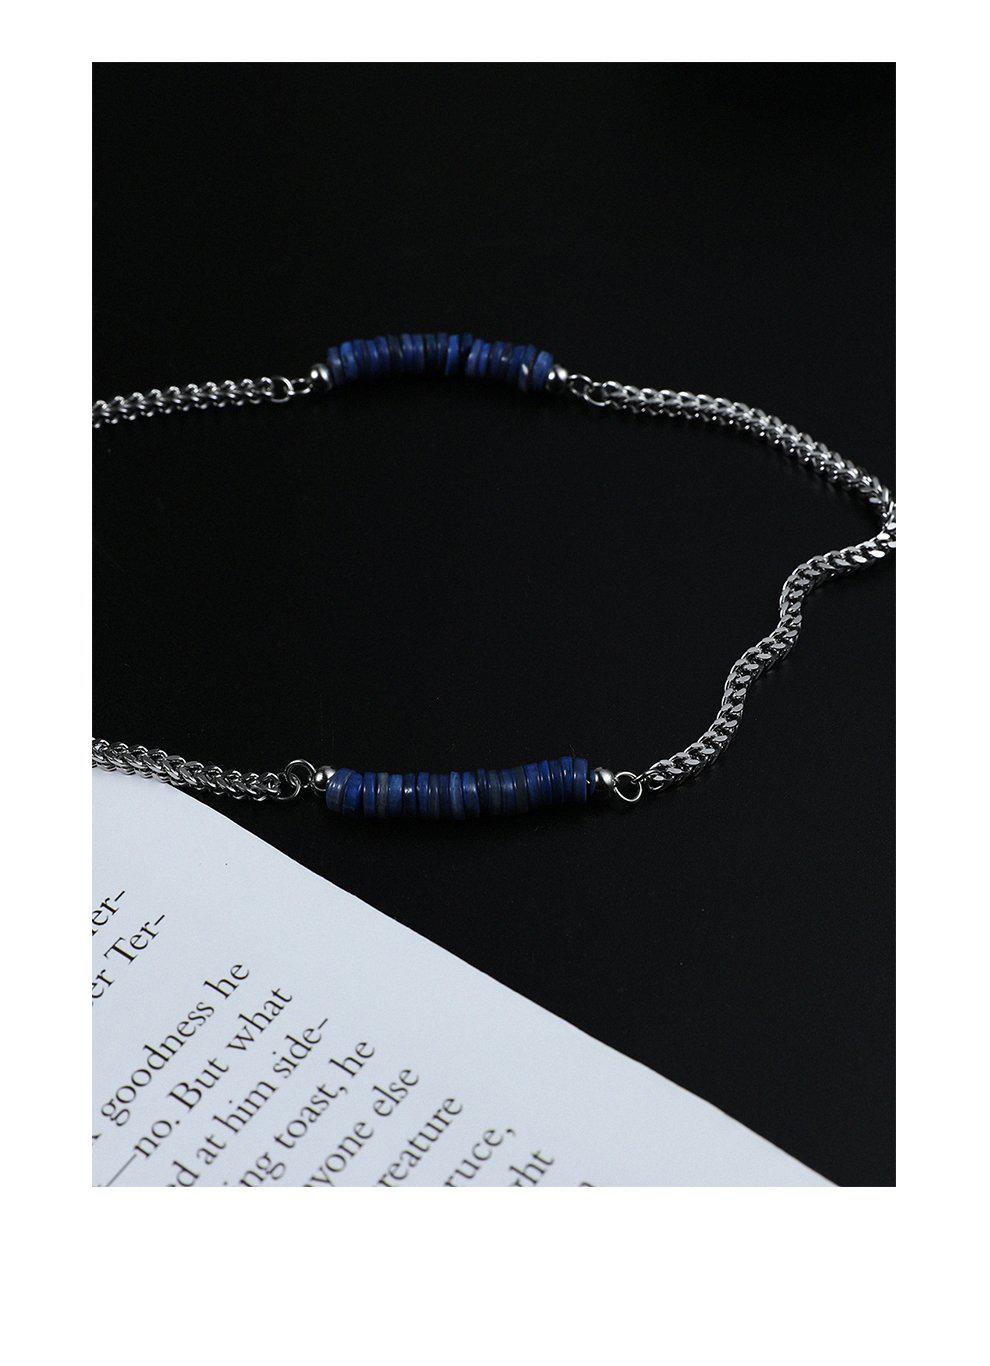 Blue Bead Stitching Necklace